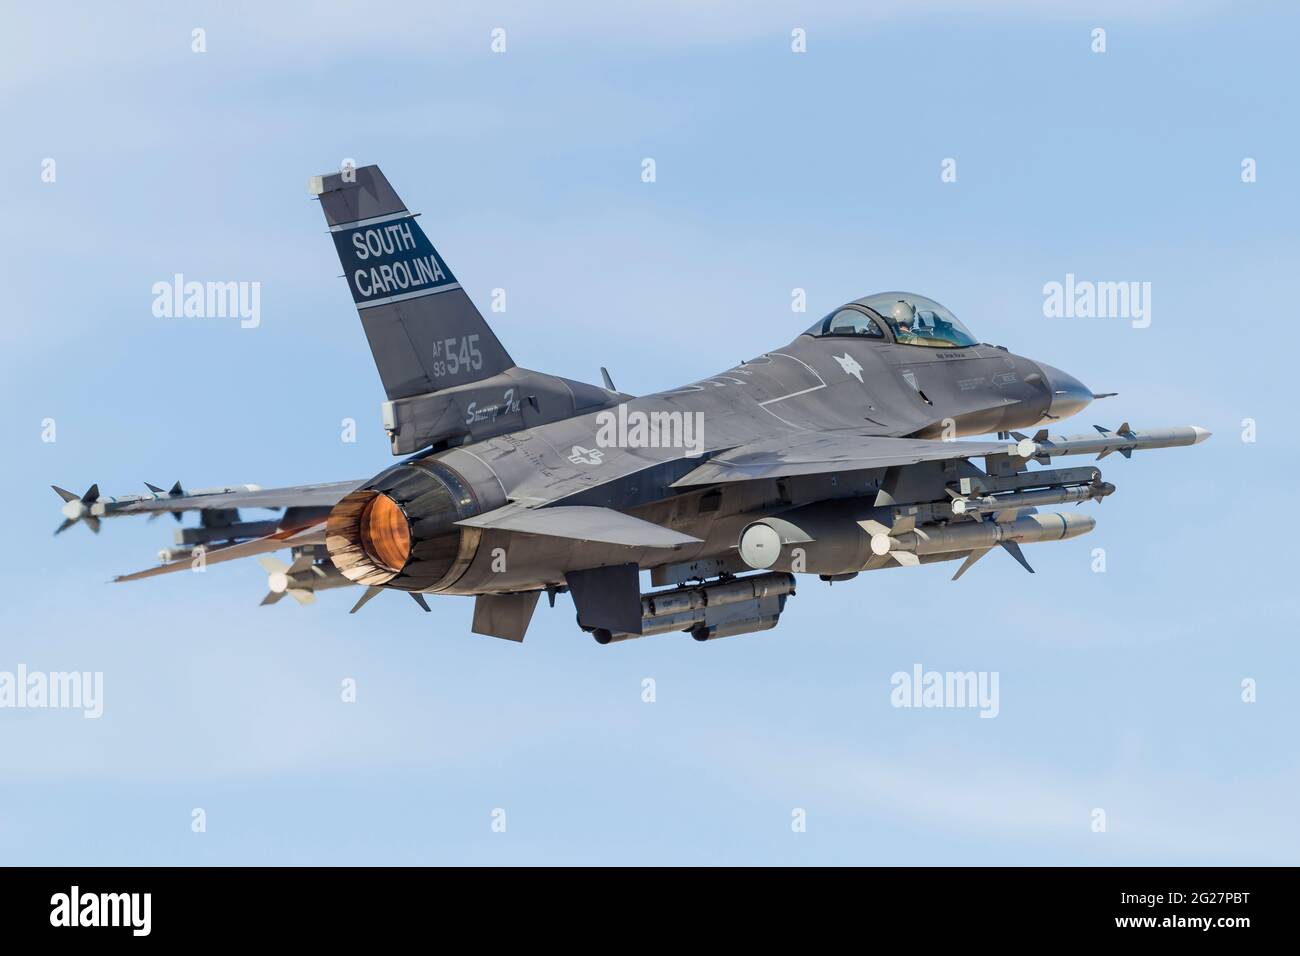 Eine South Carolina Air National Guard F-16CJ kämpft gegen Falcon beim Start. Stockfoto